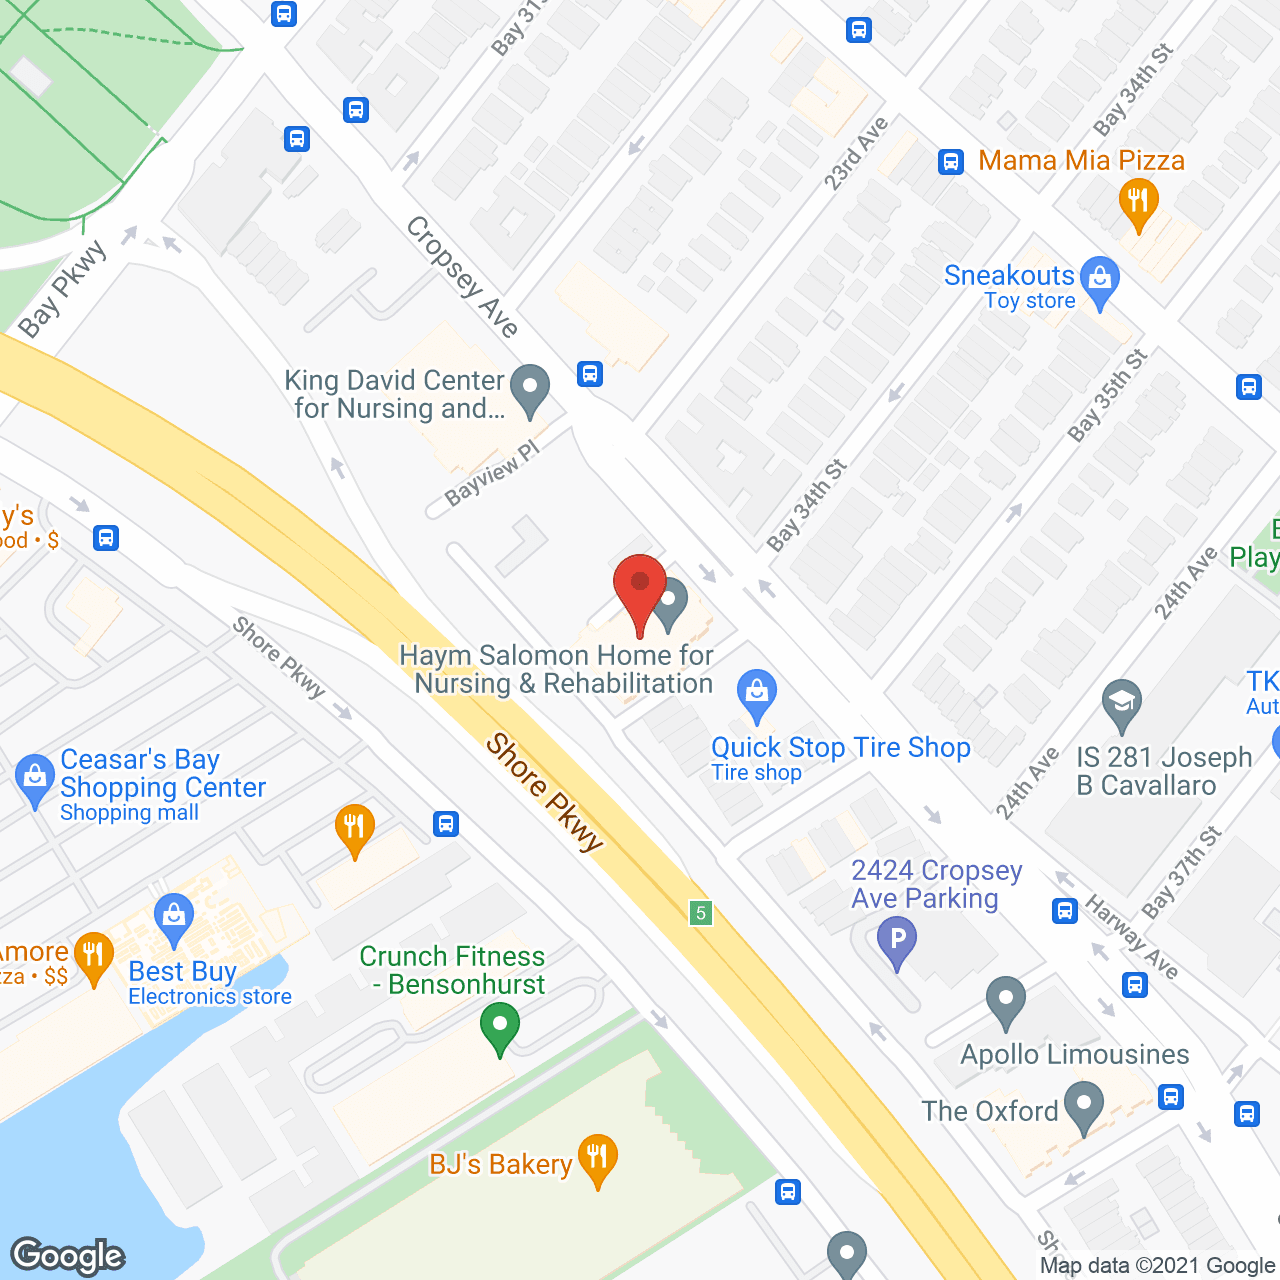 Haym Salomon Adult Day Care Center in google map